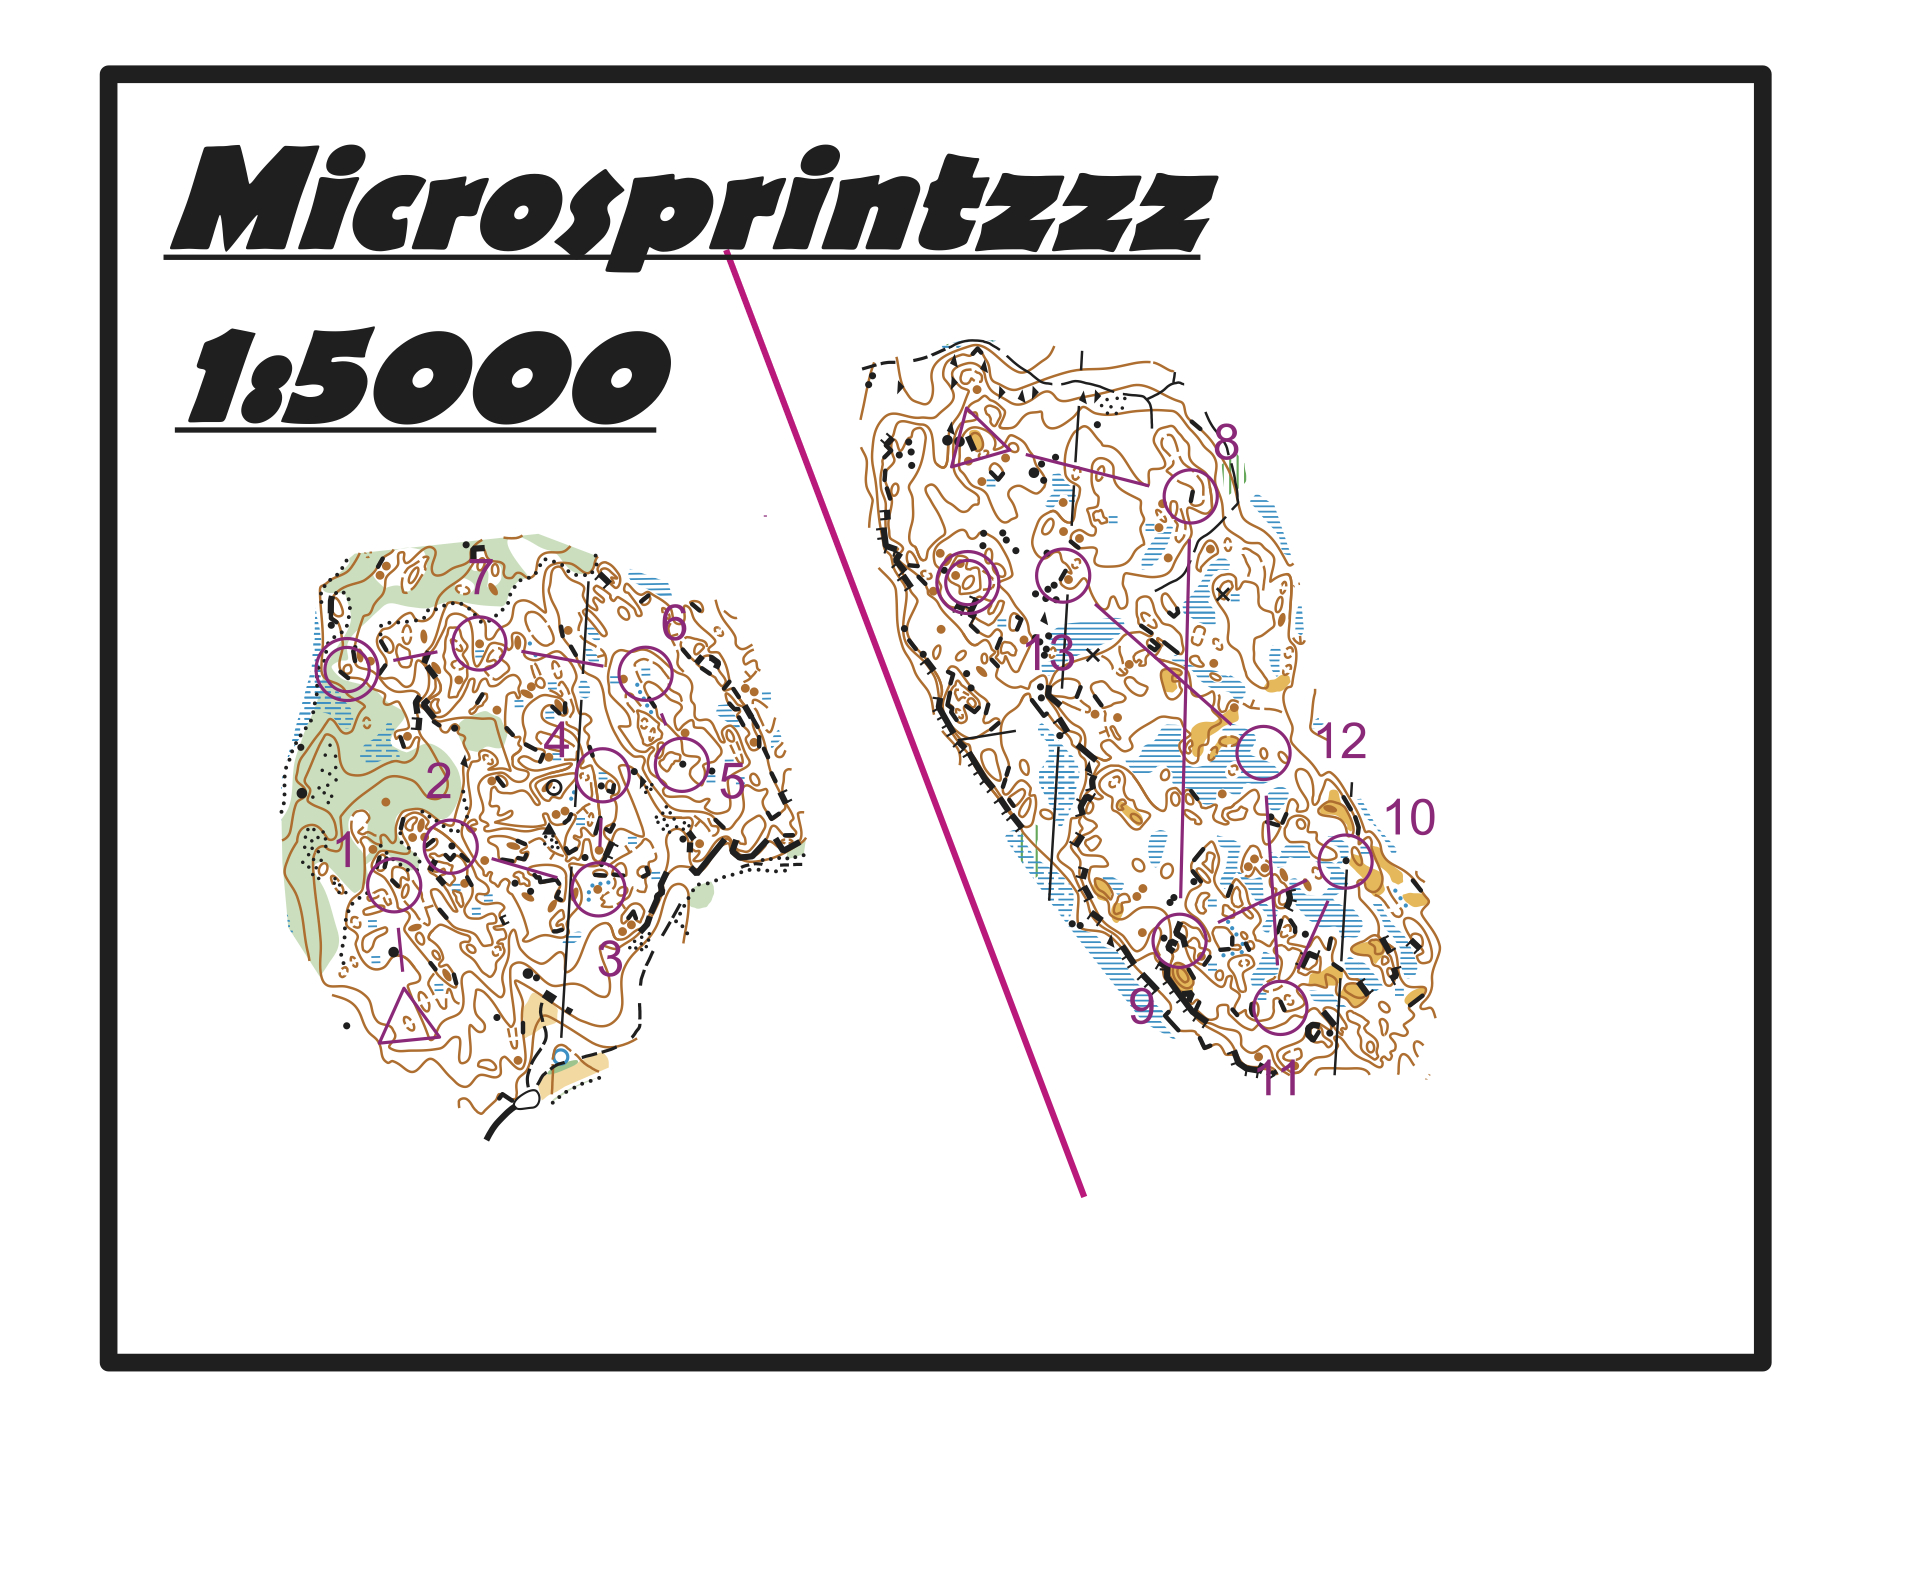 Micro sprintzzz (14-02-2017)